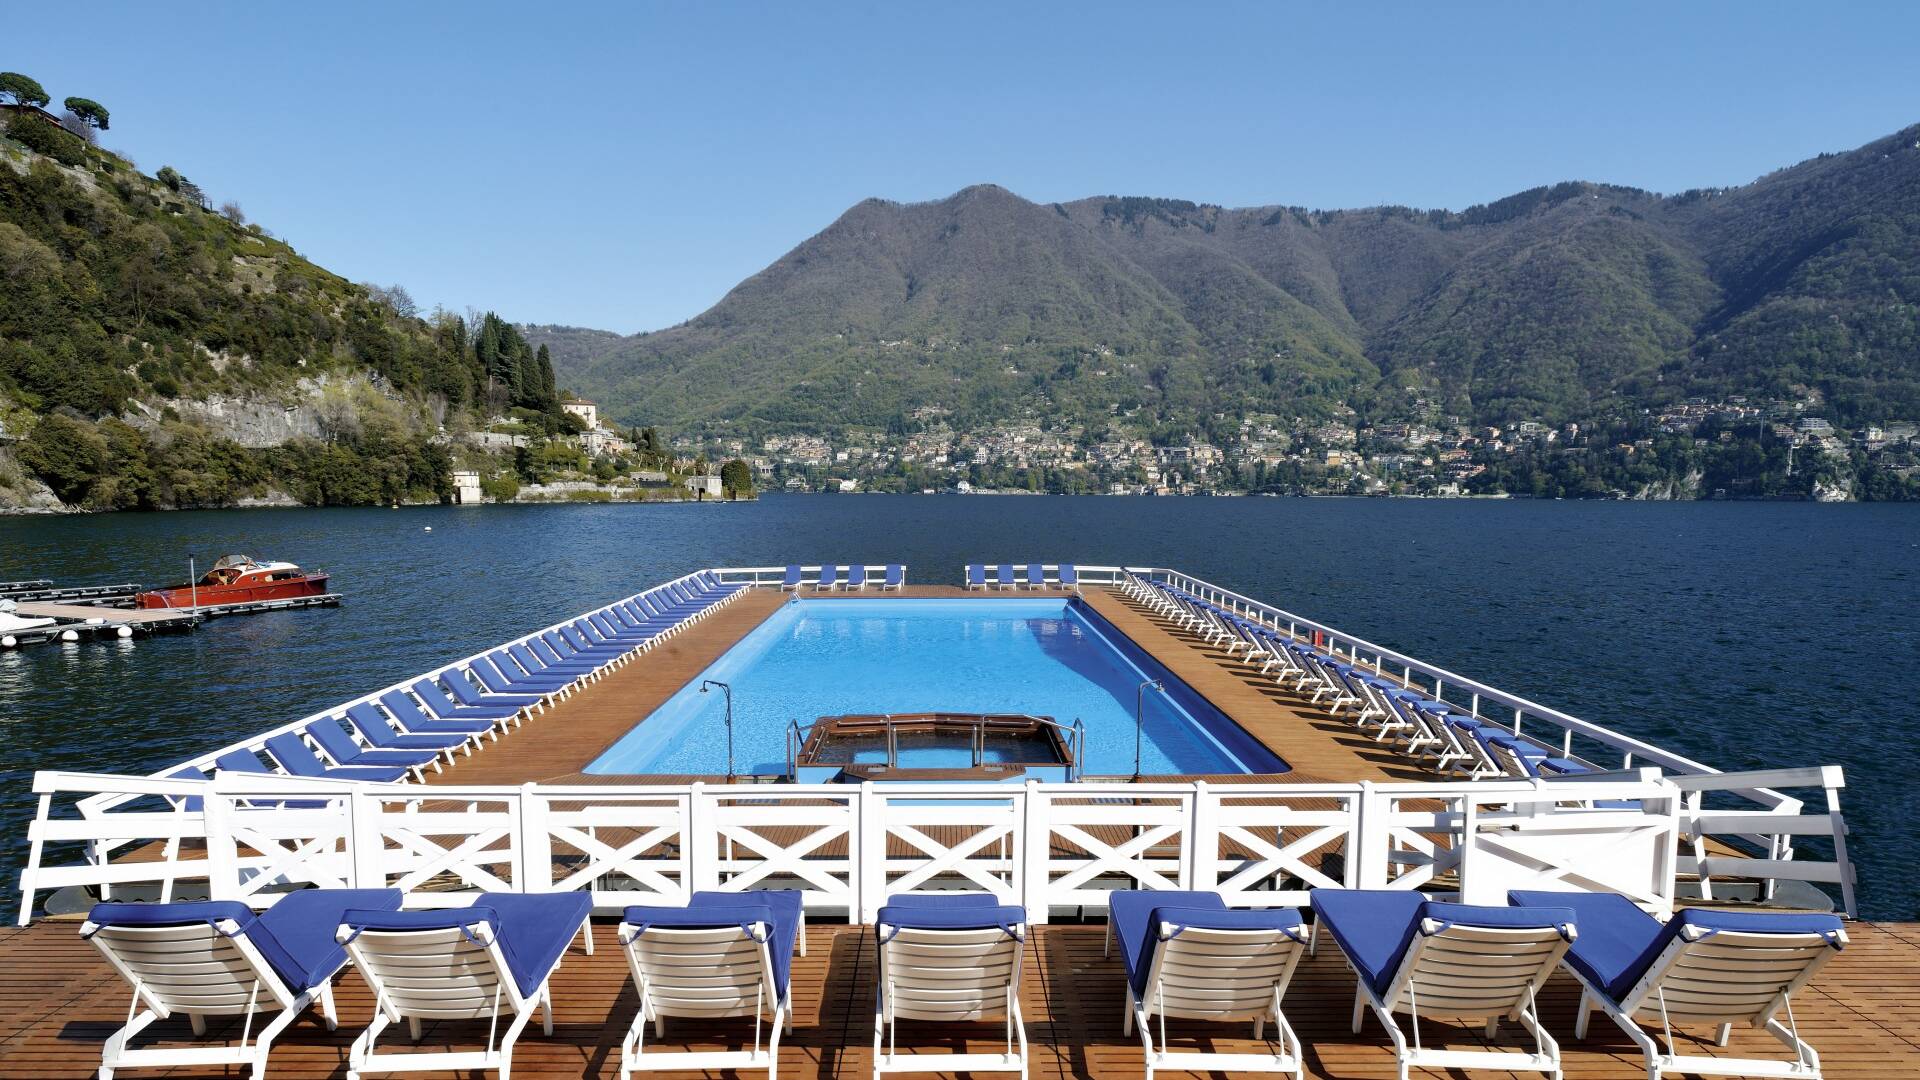 Villa D'Este hotel, Como lake, sharing swimming pool